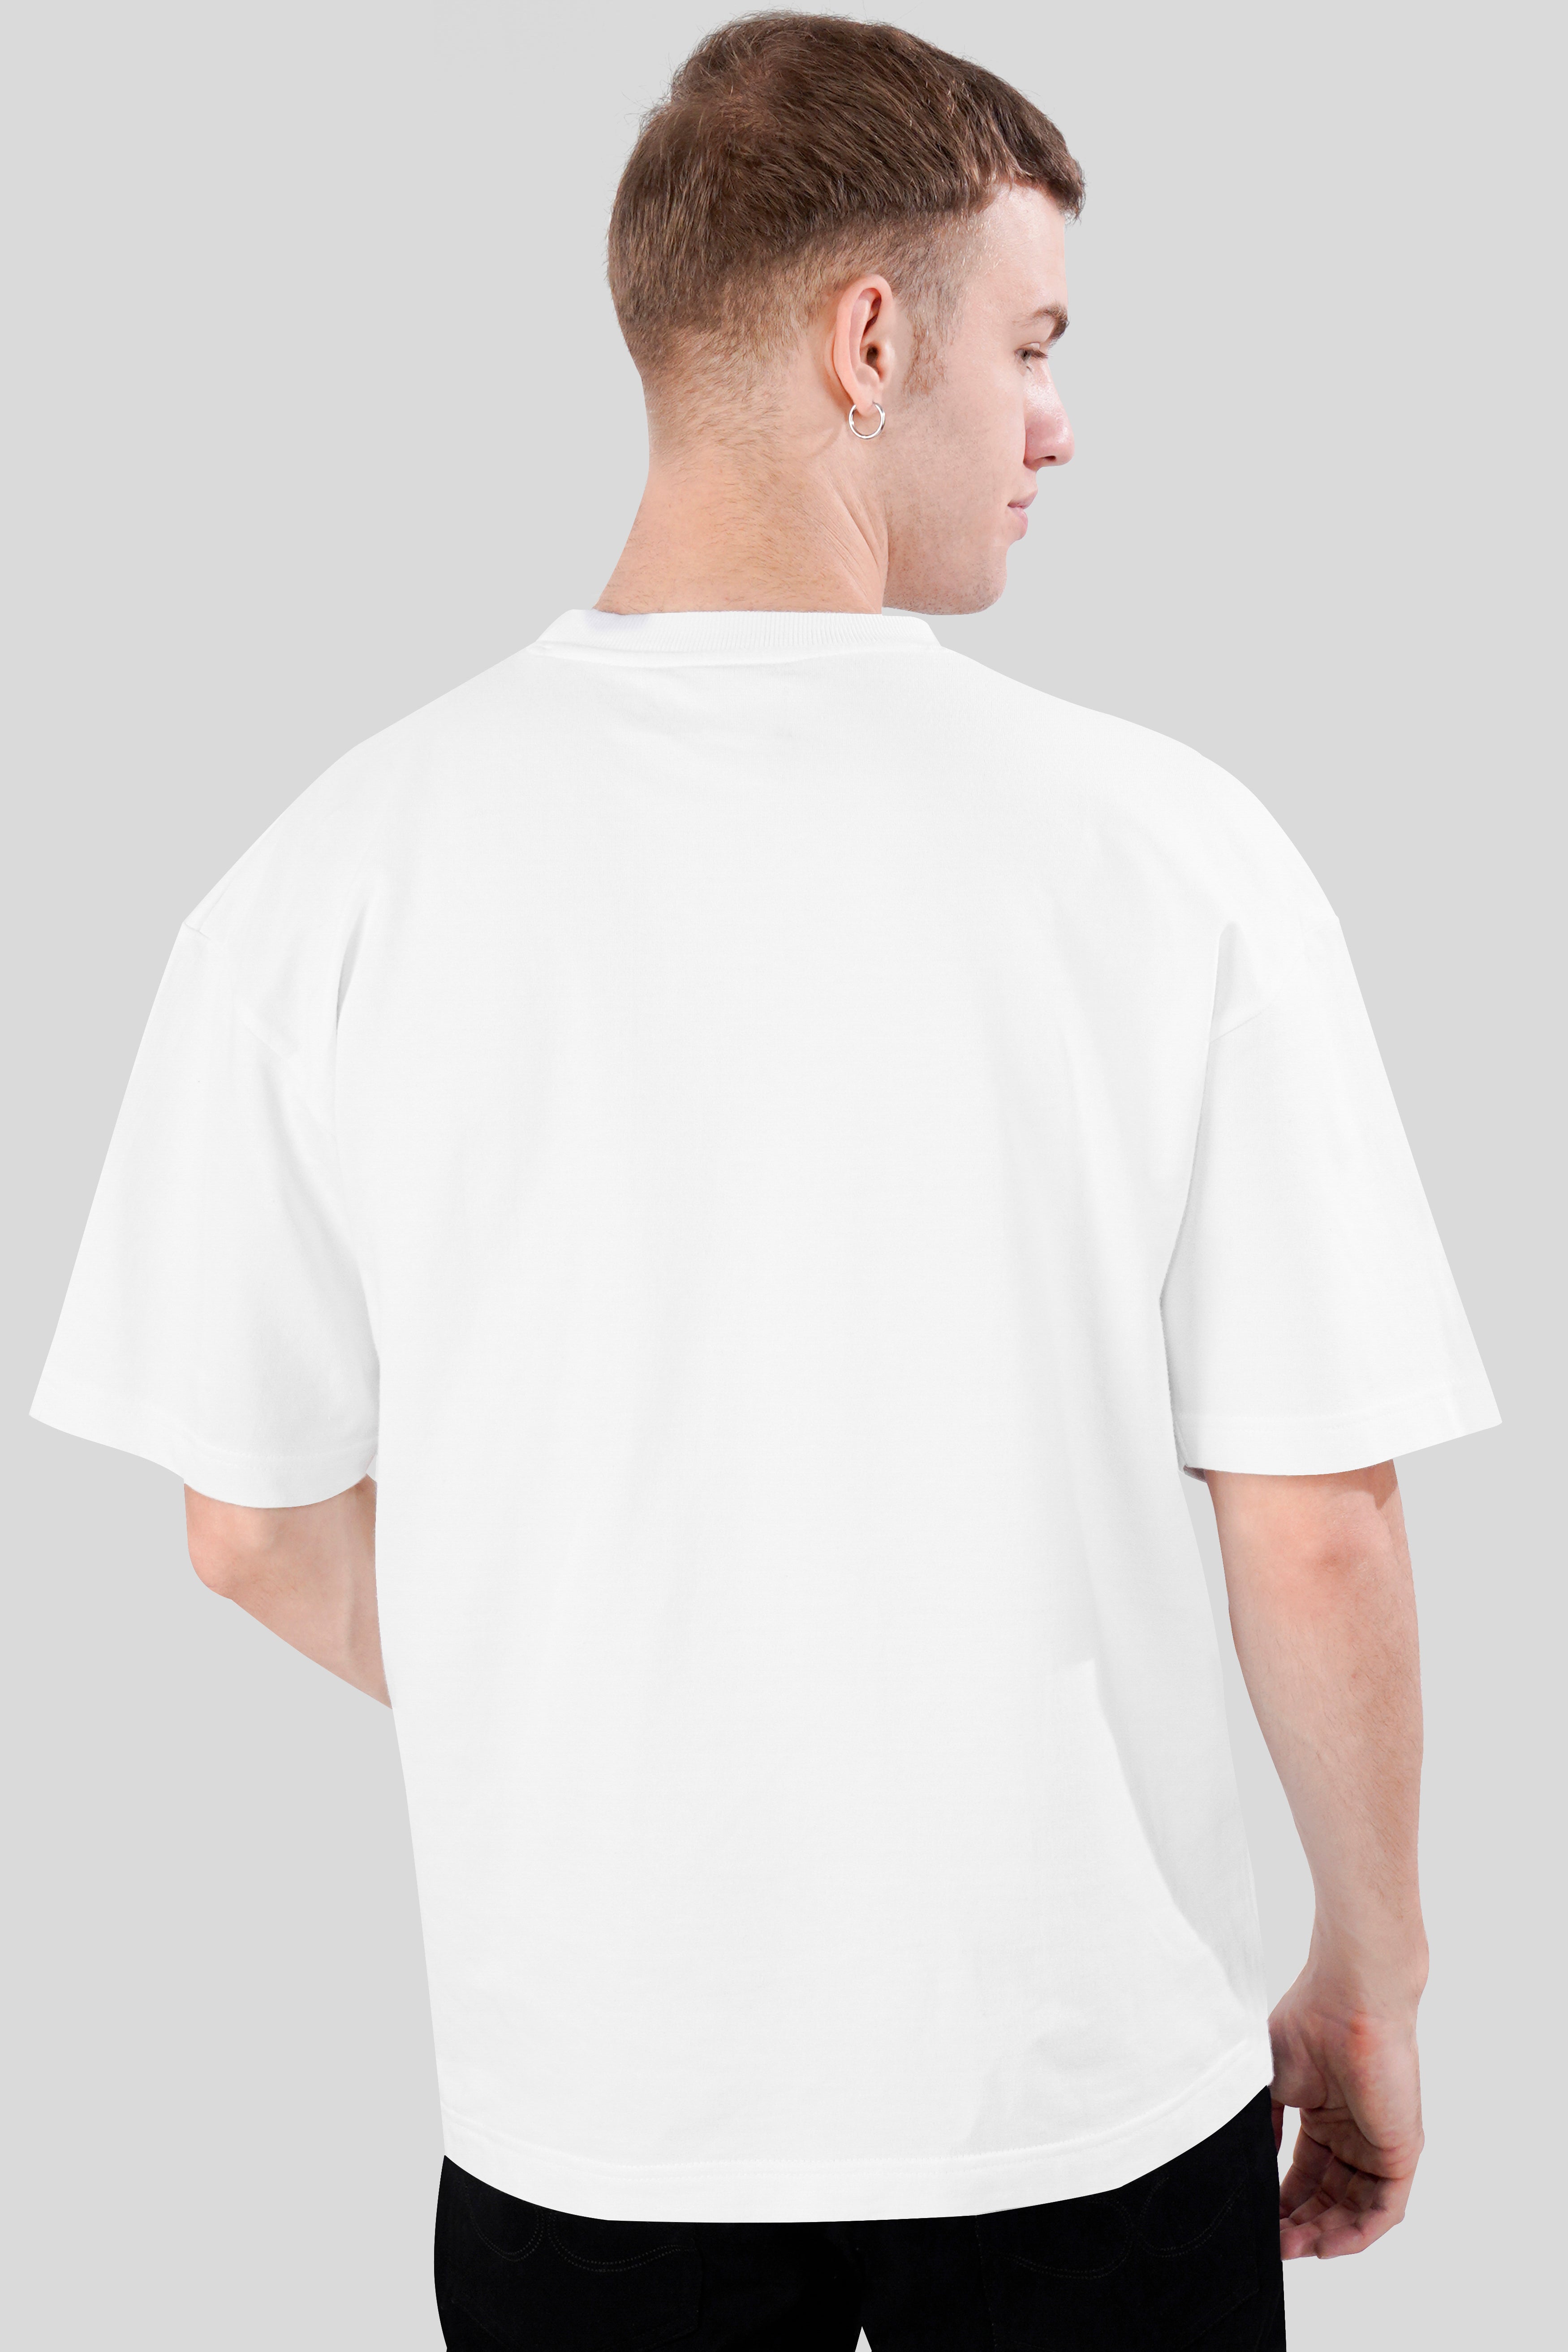 Bright White Printed Premium Cotton Oversized T-shirt TS945-S, TS945-M, TS945-L, TS945-XL, TS945-XXL